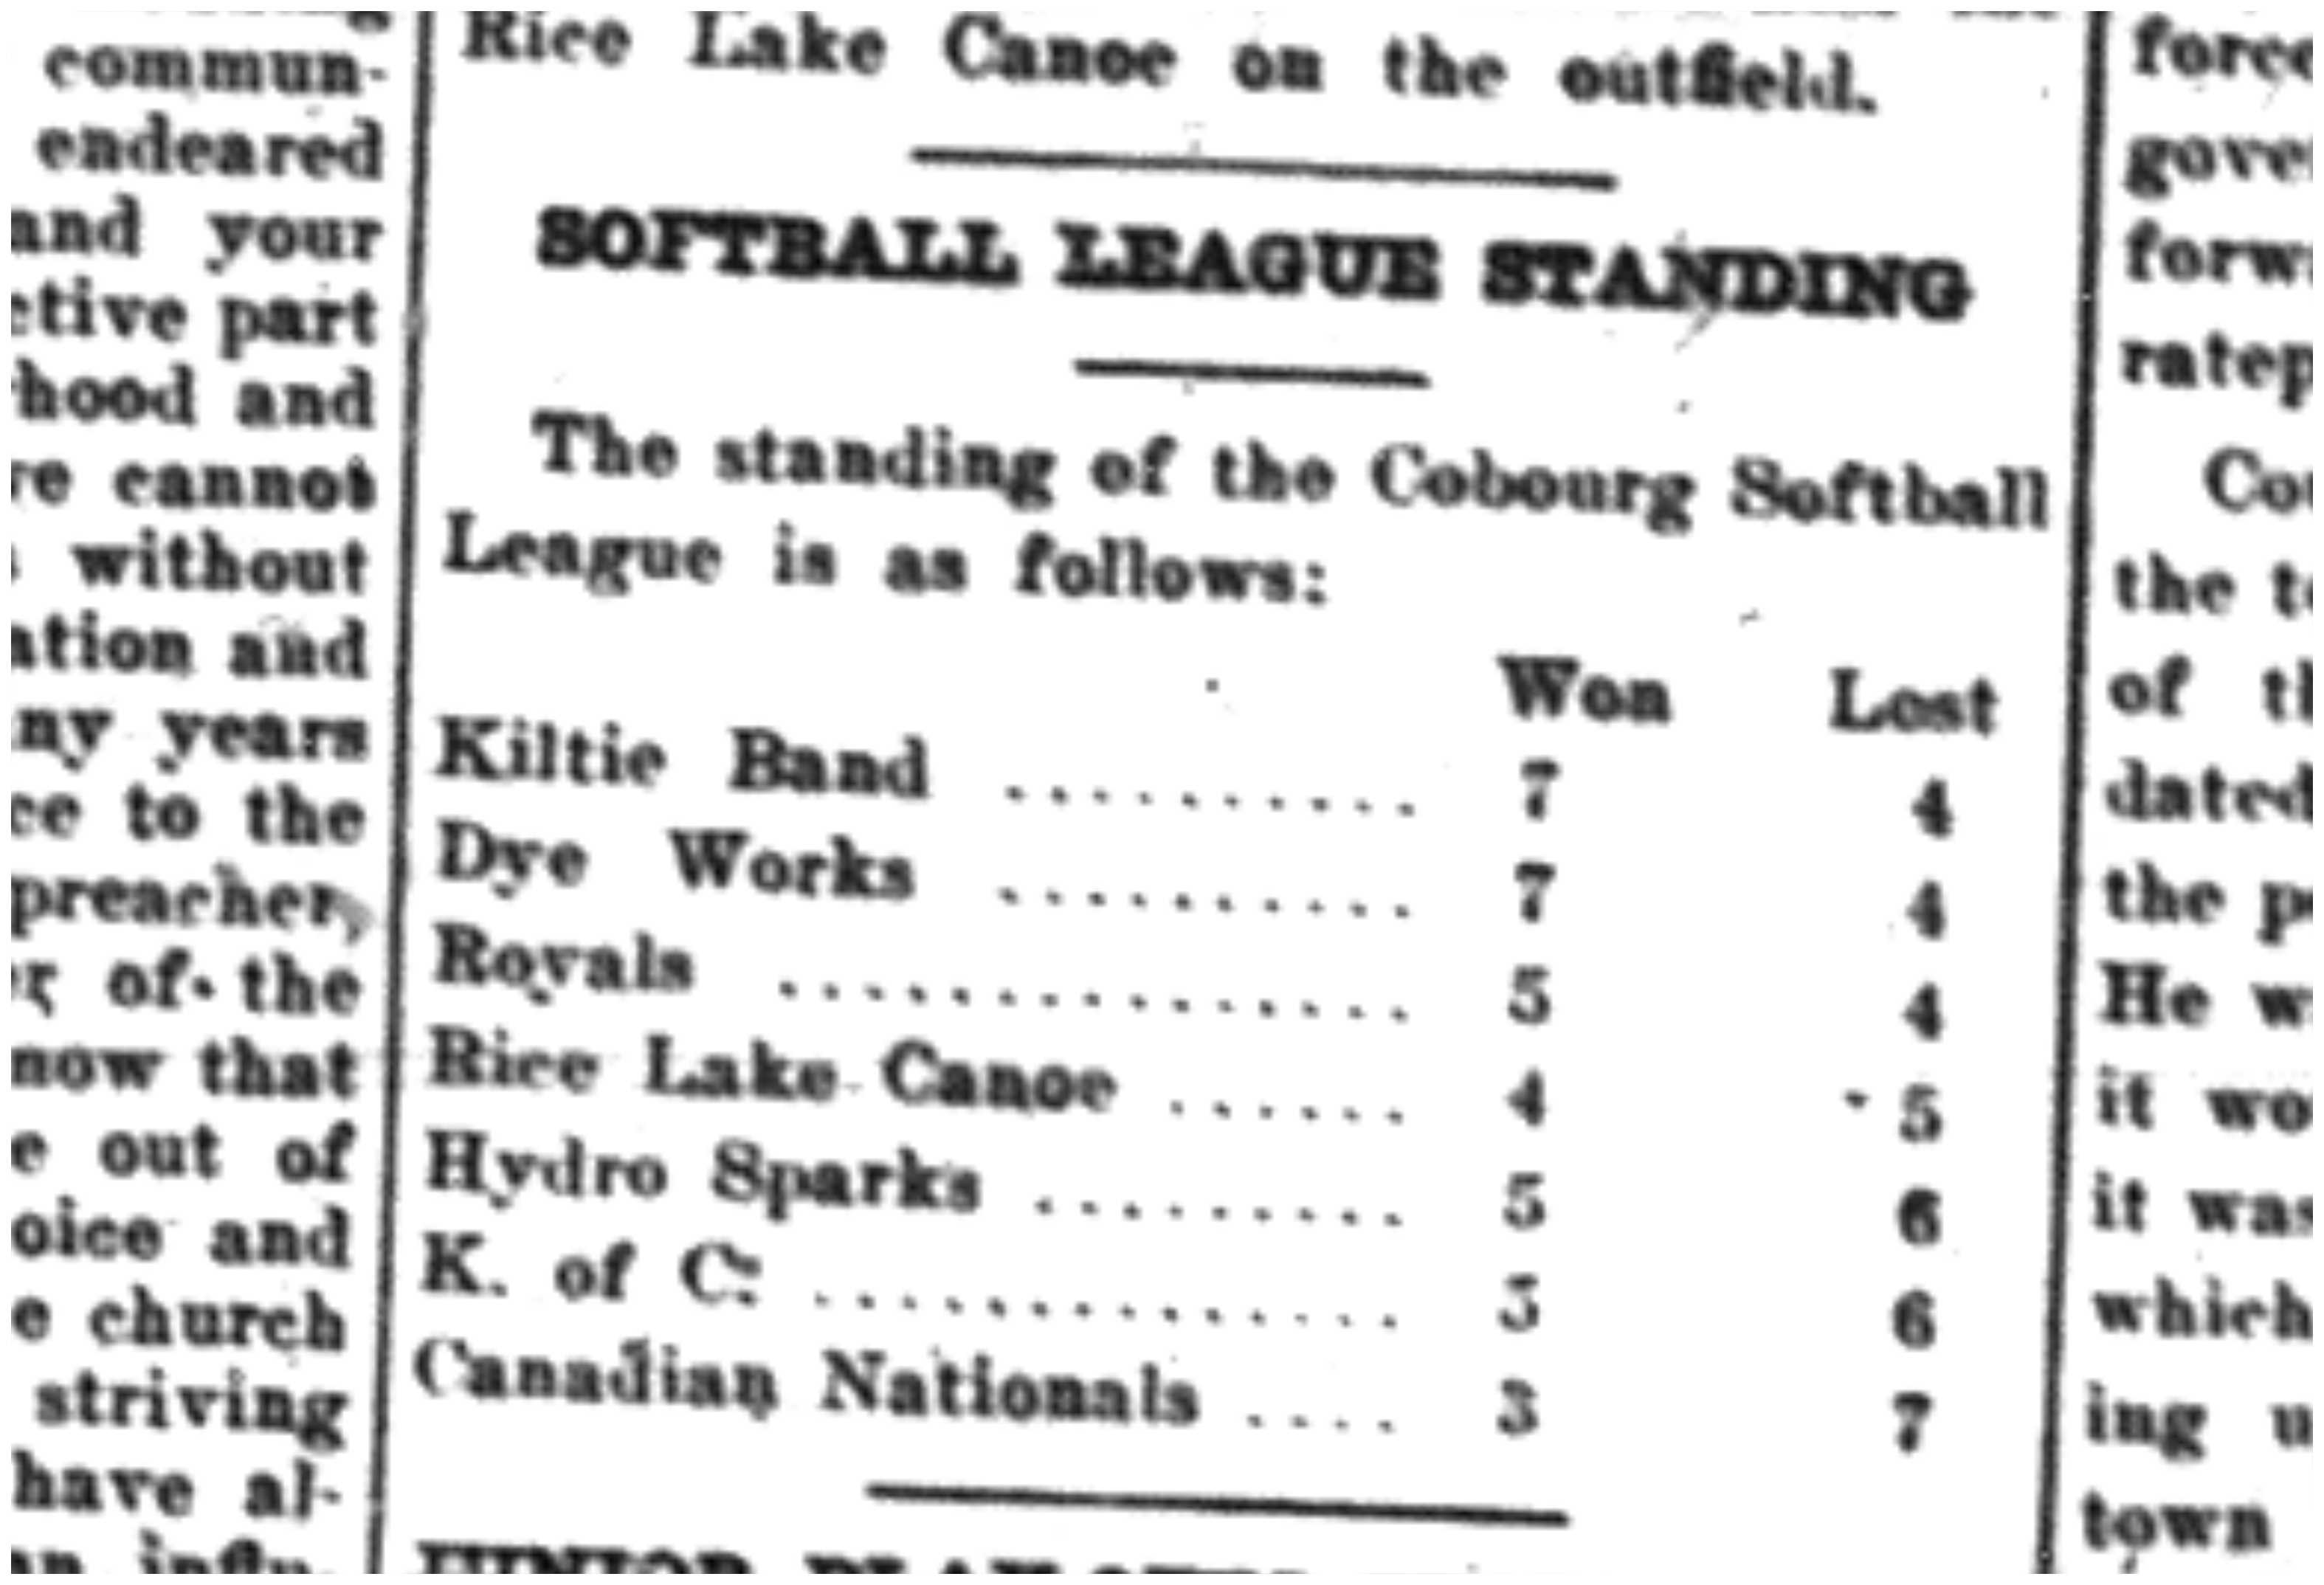 1925-07-30 Softball